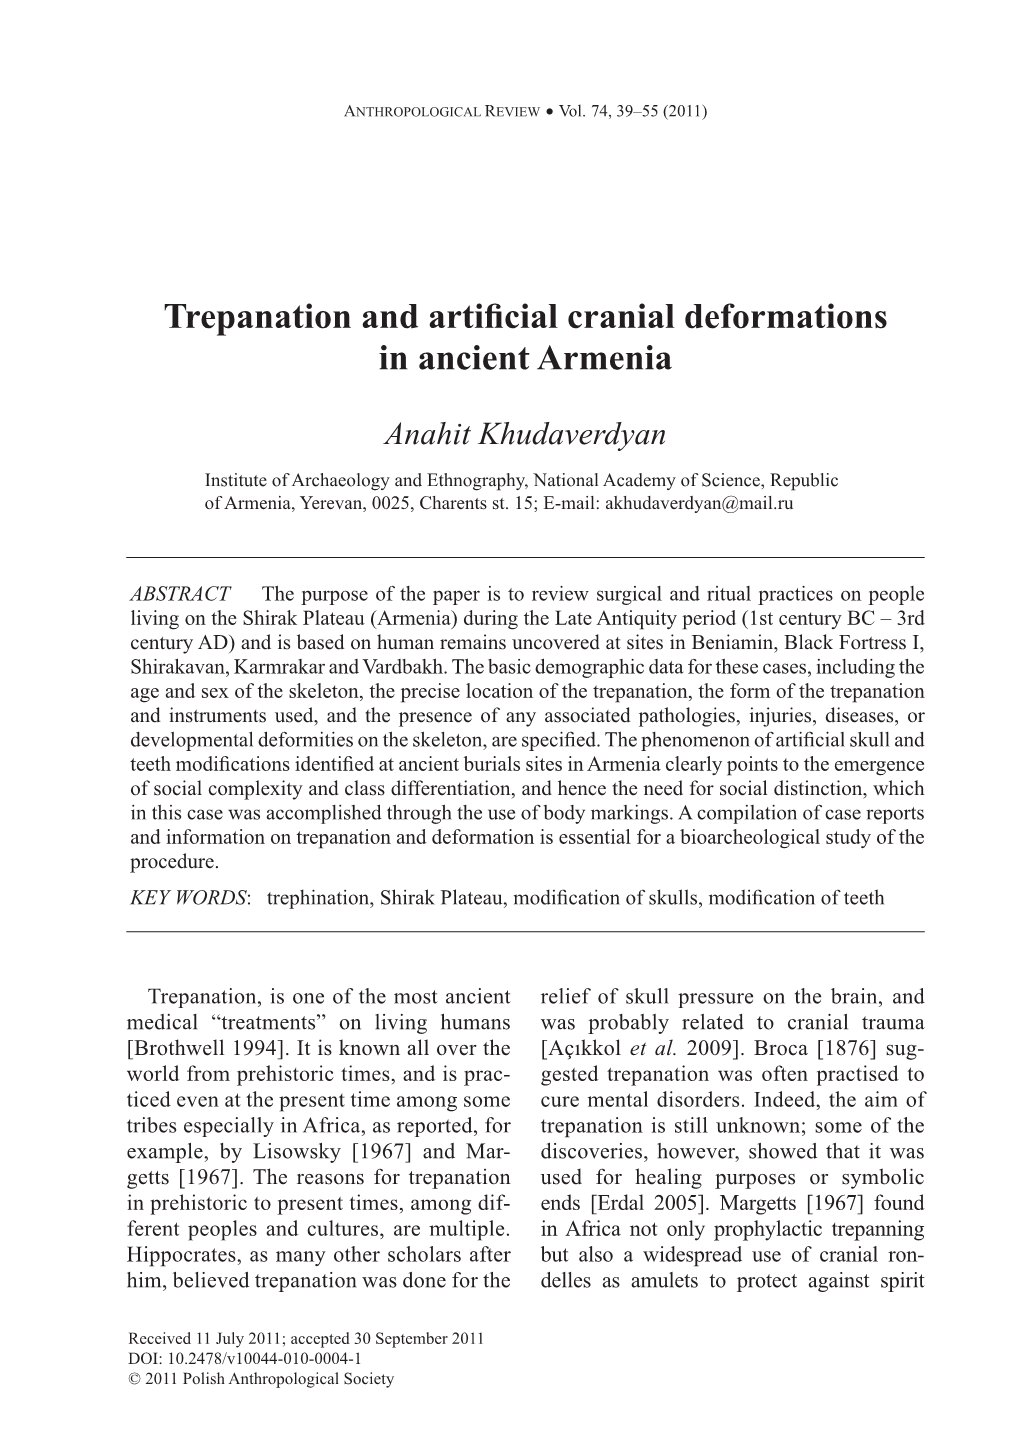 Trepanation and Artificial Cranial Deformations in Ancient Armenia